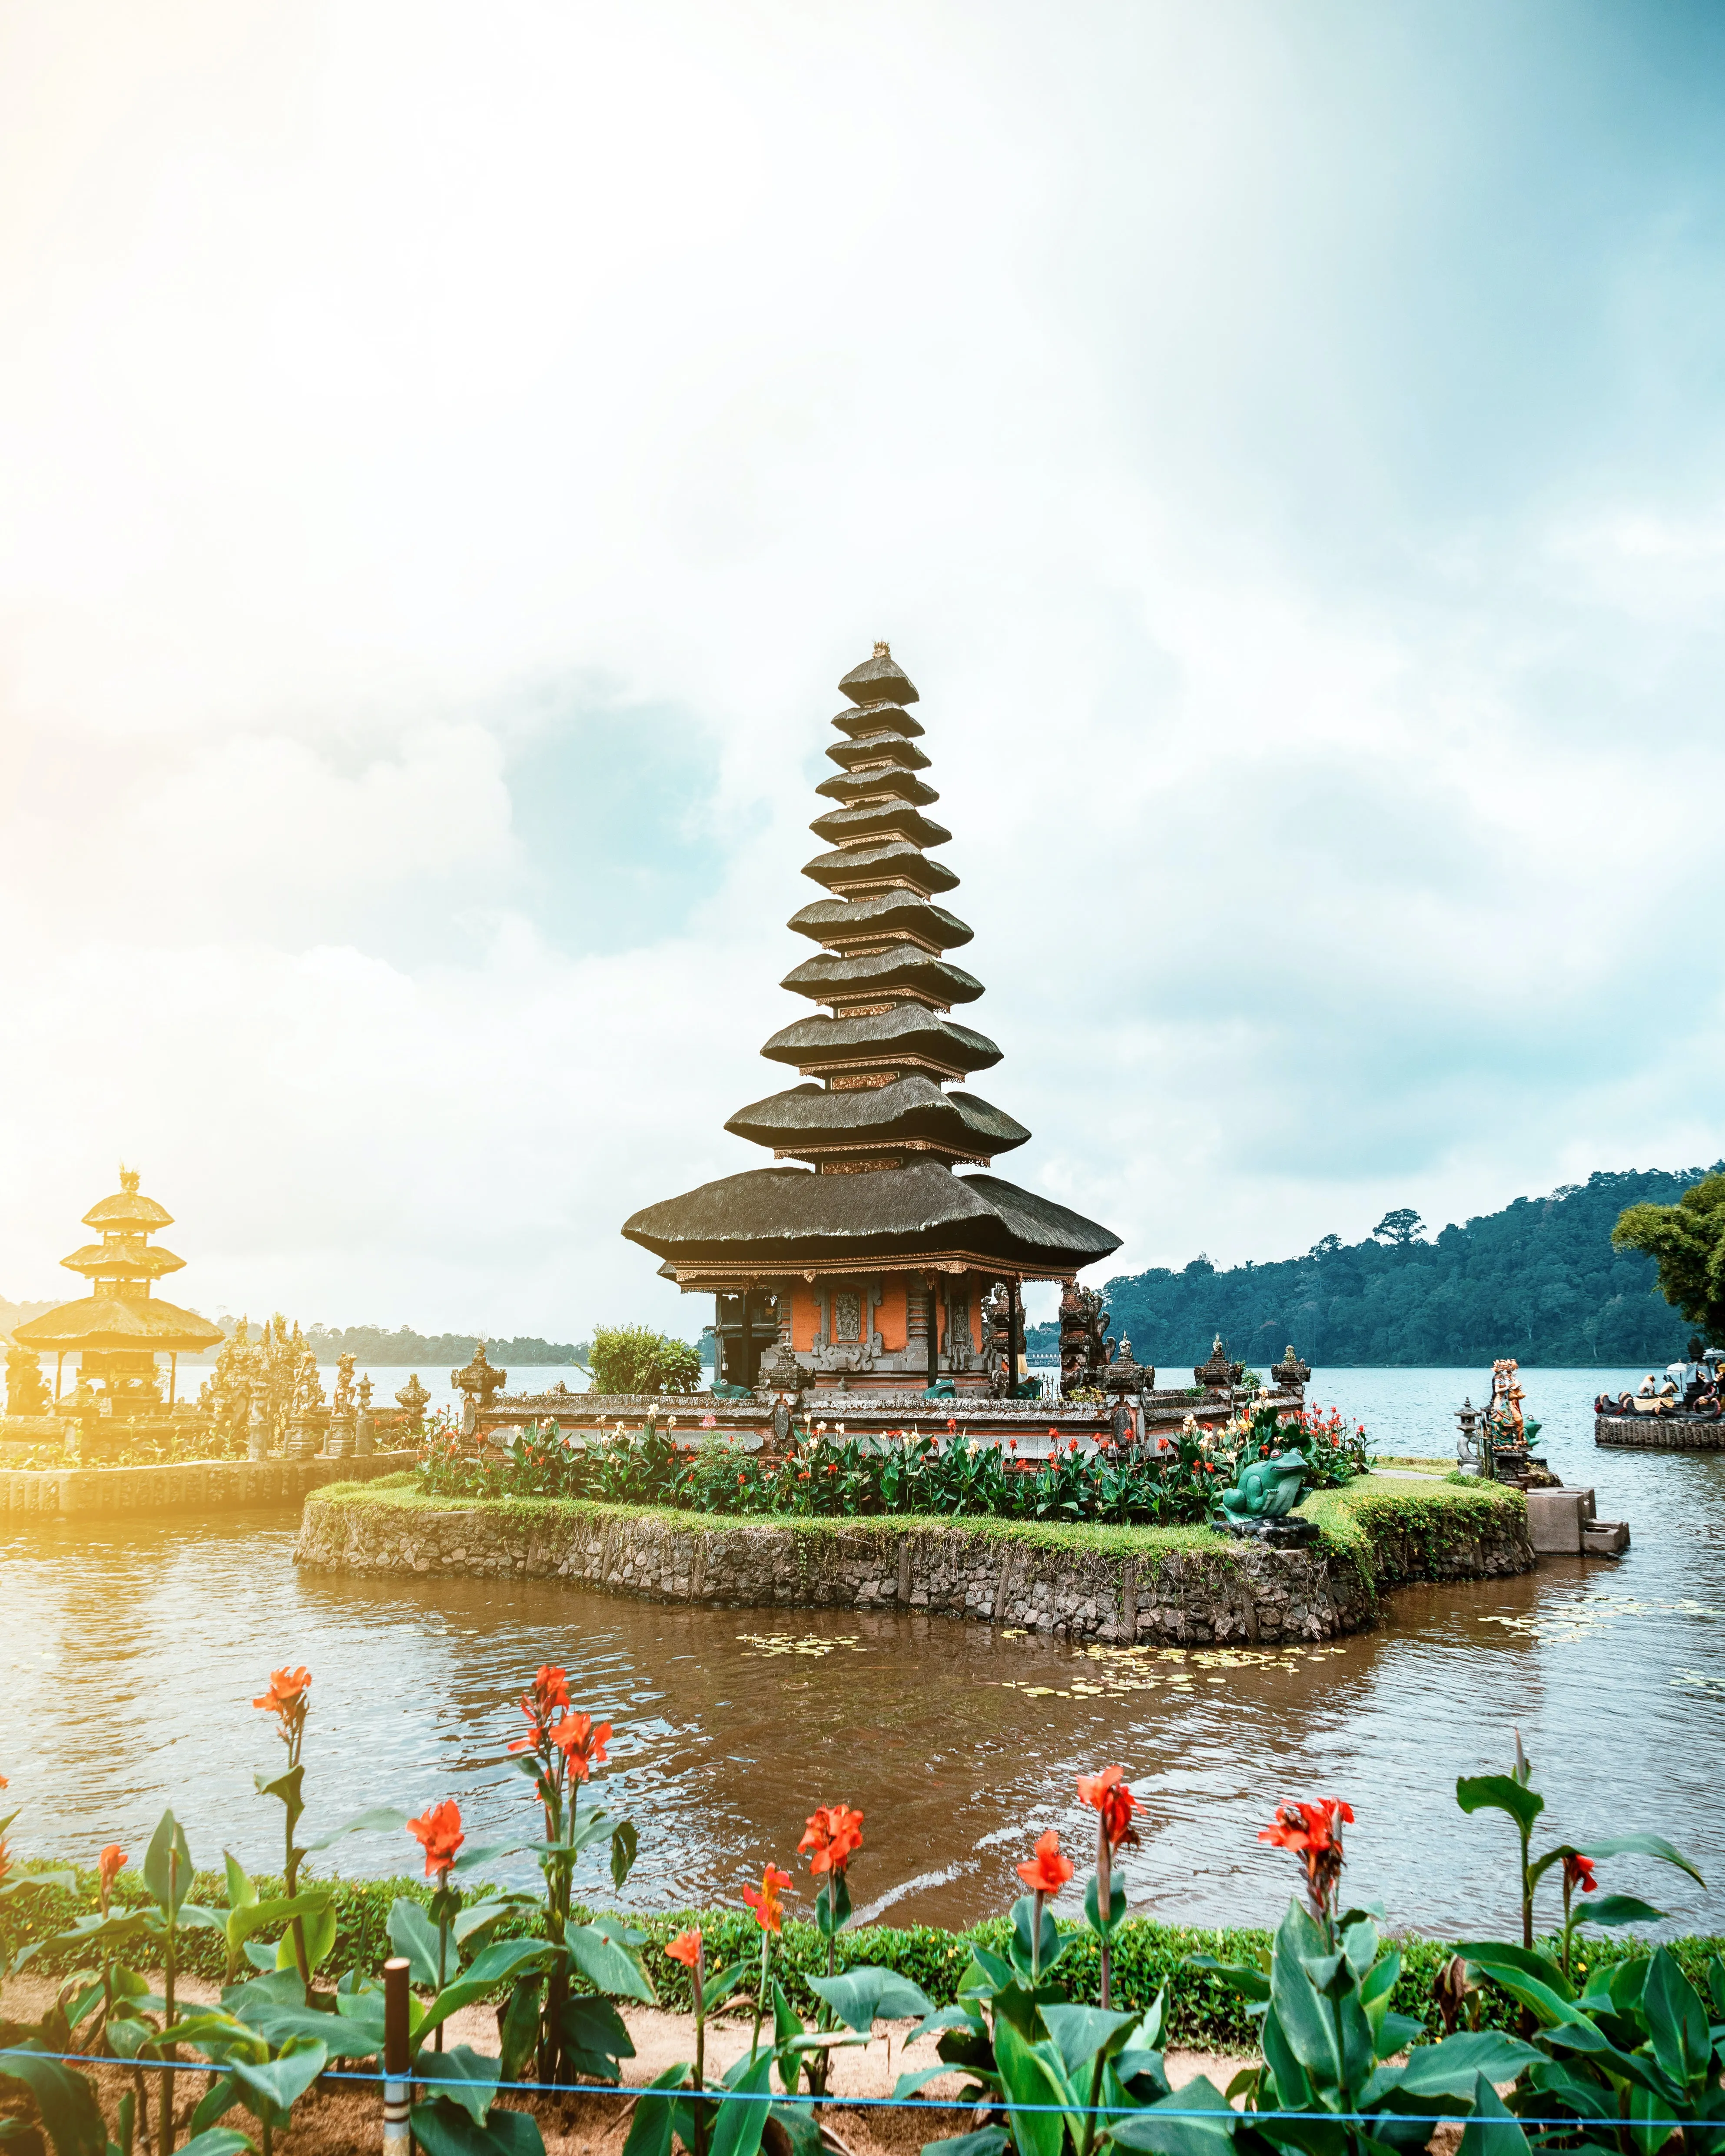 На Бали введут туристический налог